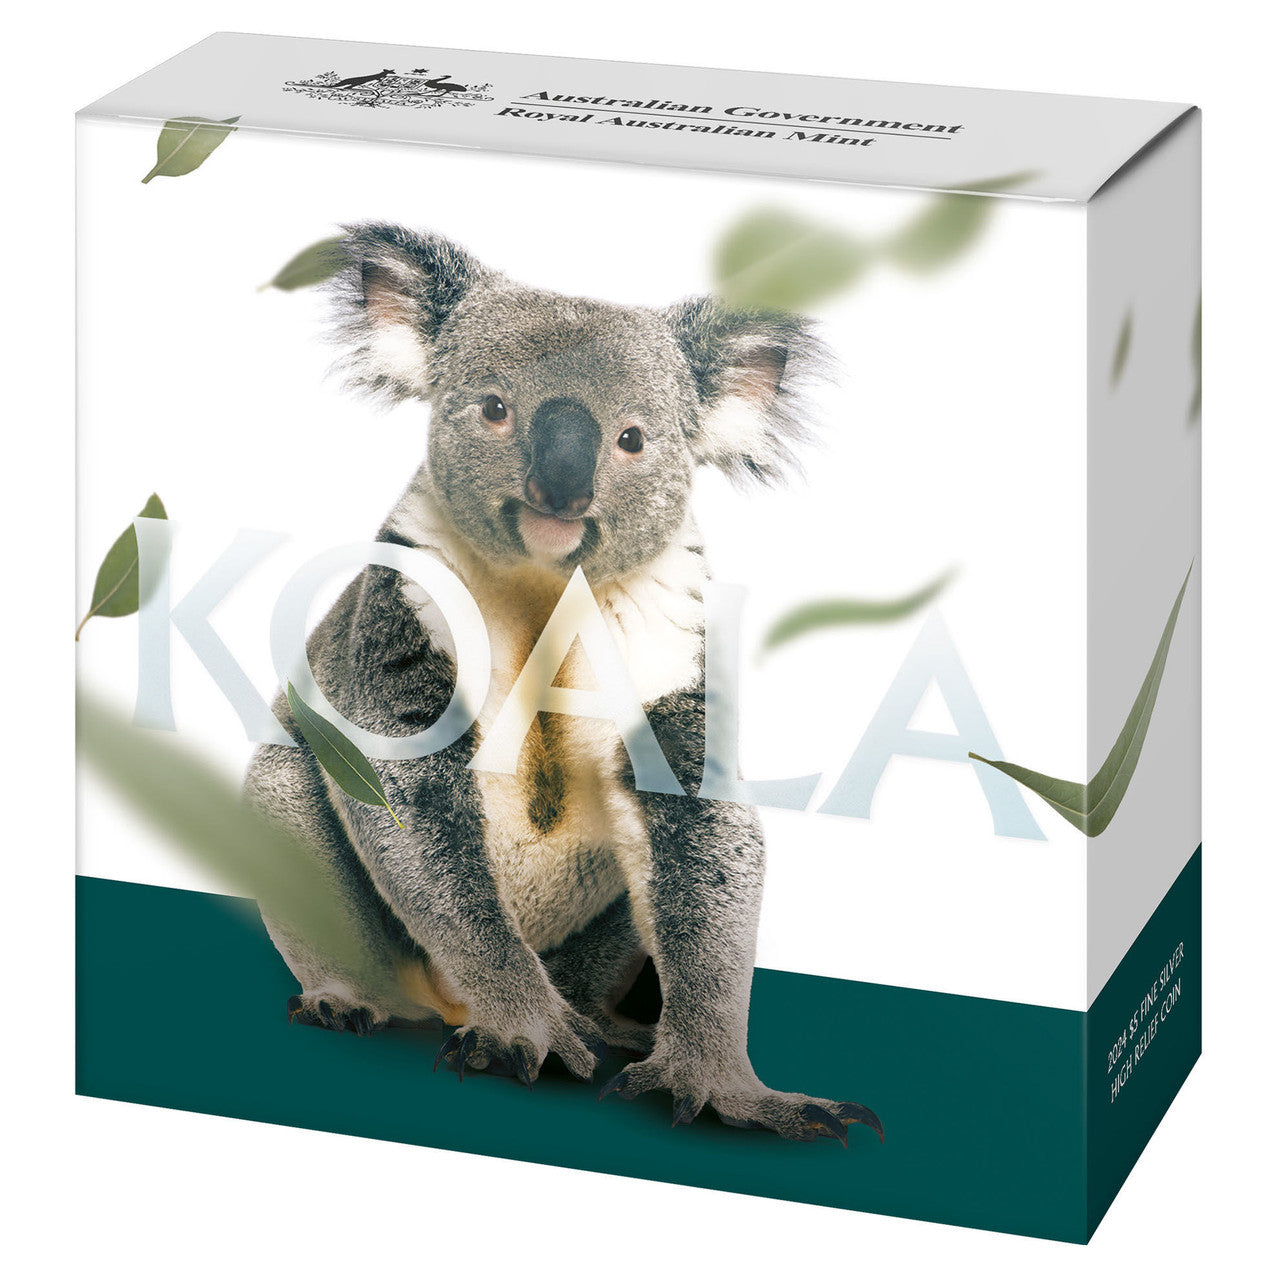 Royal Australian Mint 2023 $5 Koala 1 oz Silver High Relief Coin